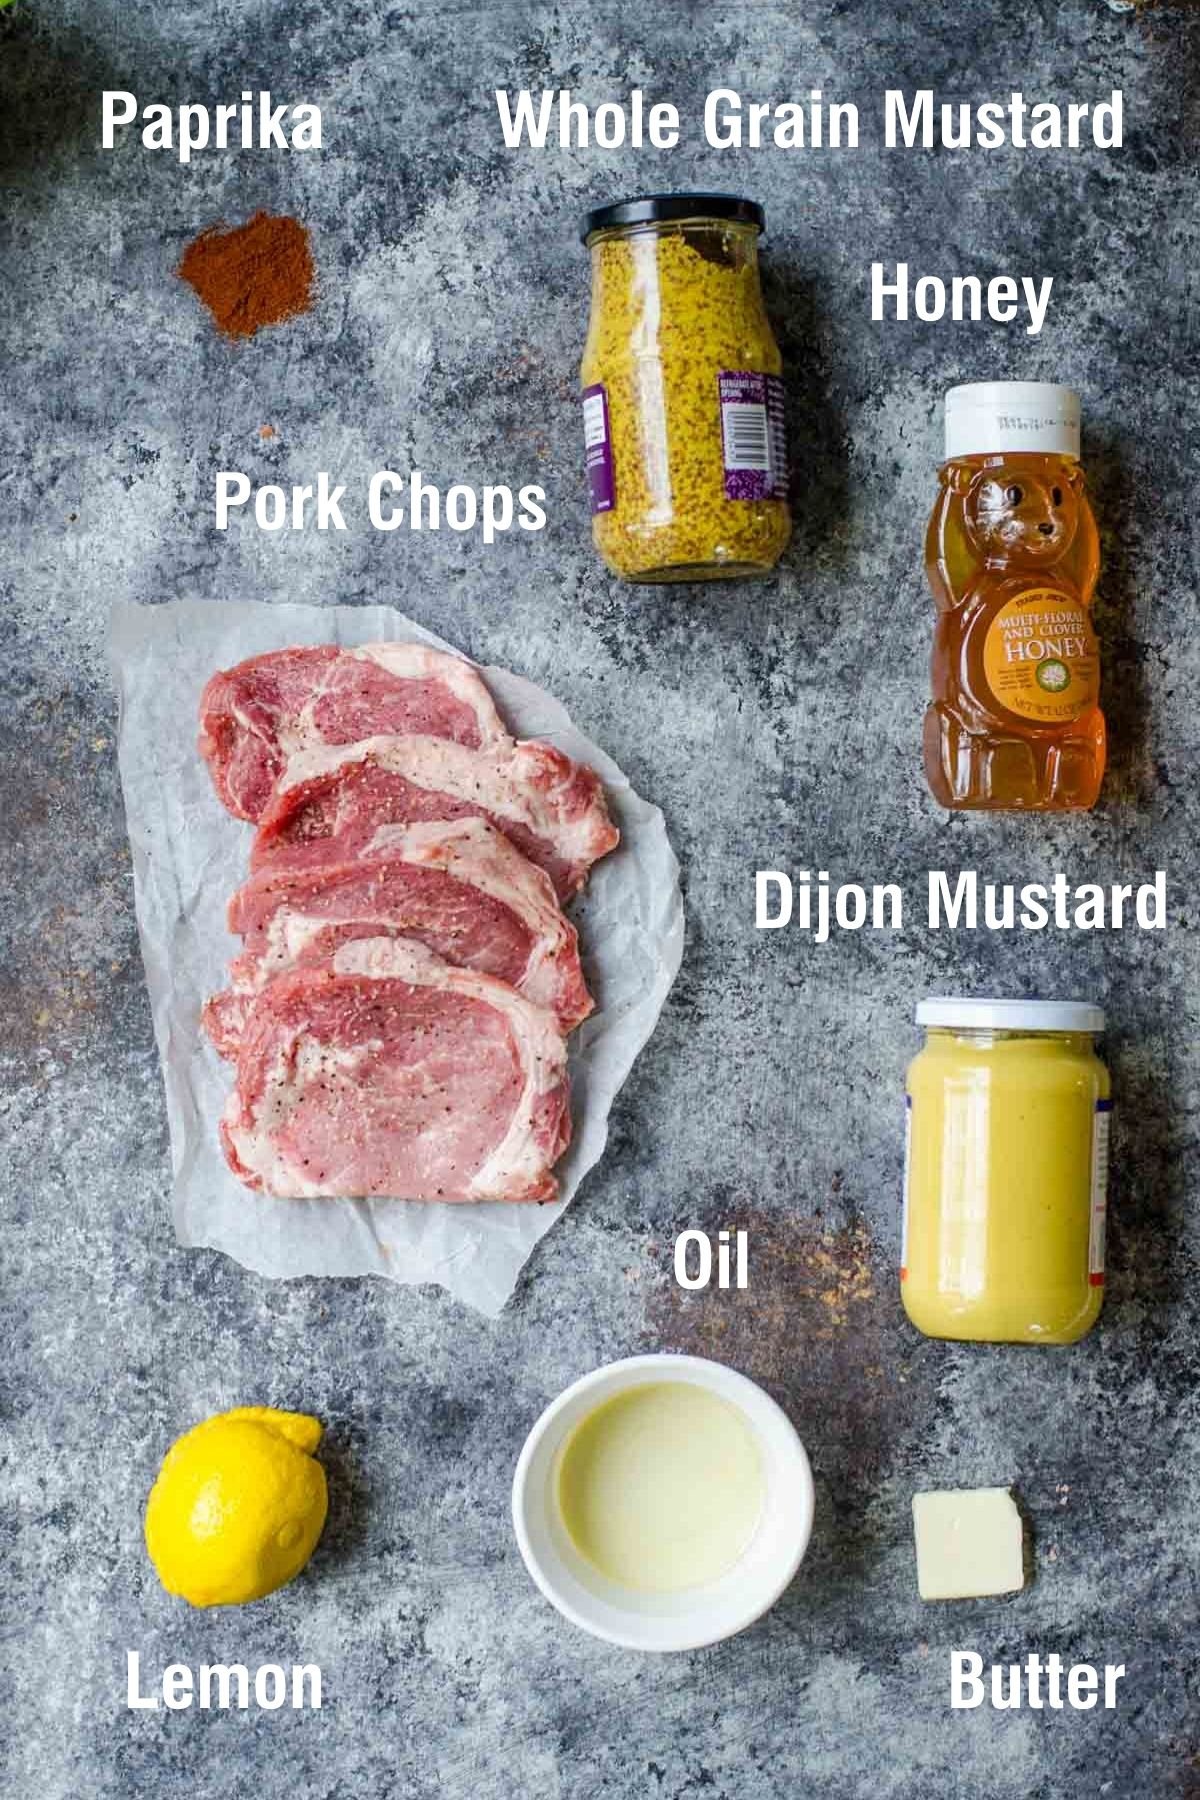 Labeled ingredients for honey mustard pork chops